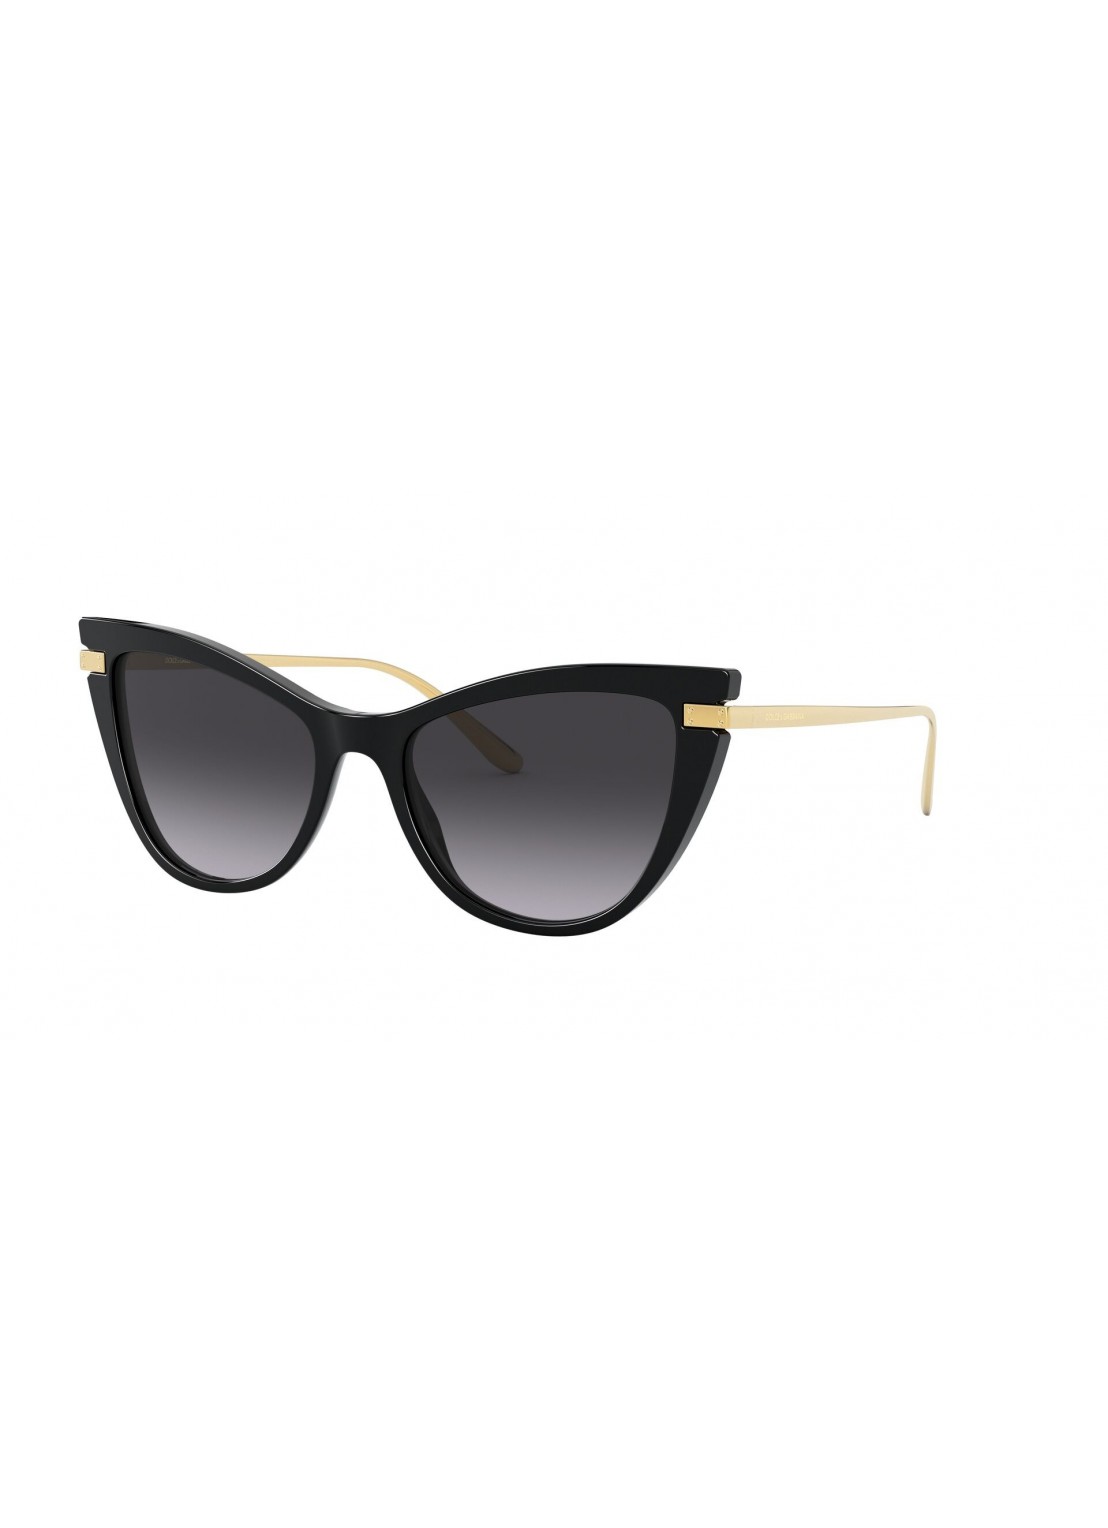 Gafas dolce&gabbana sunglasses woman 0dg4384 0dg4384 501 8g talla 53
 